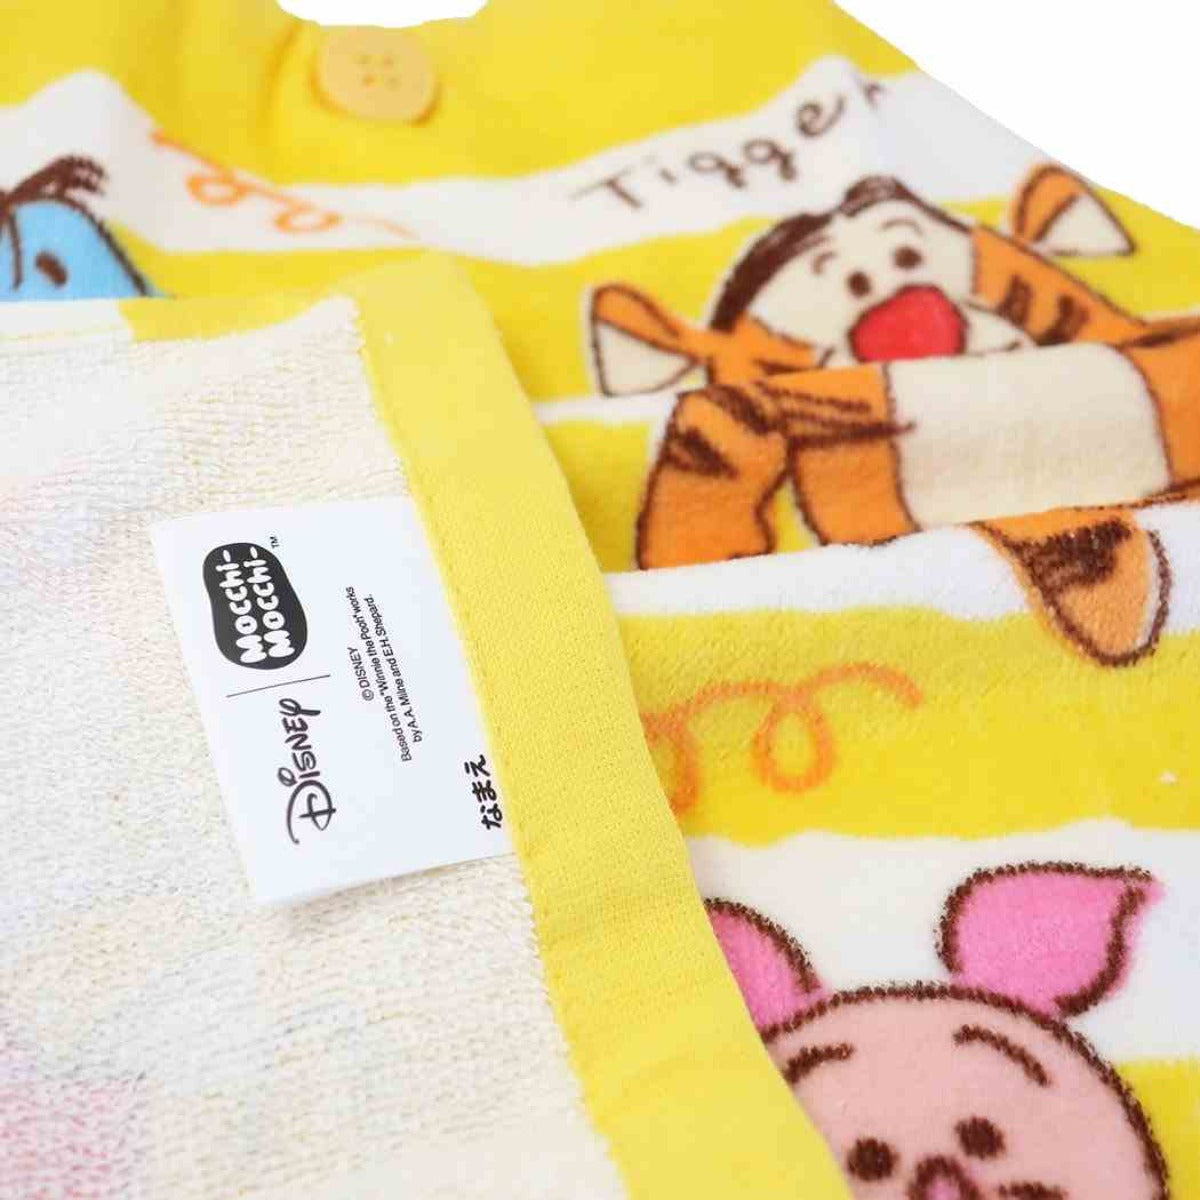 Multi-Function Towel - Disney Winnie the Pooh  34x35cm